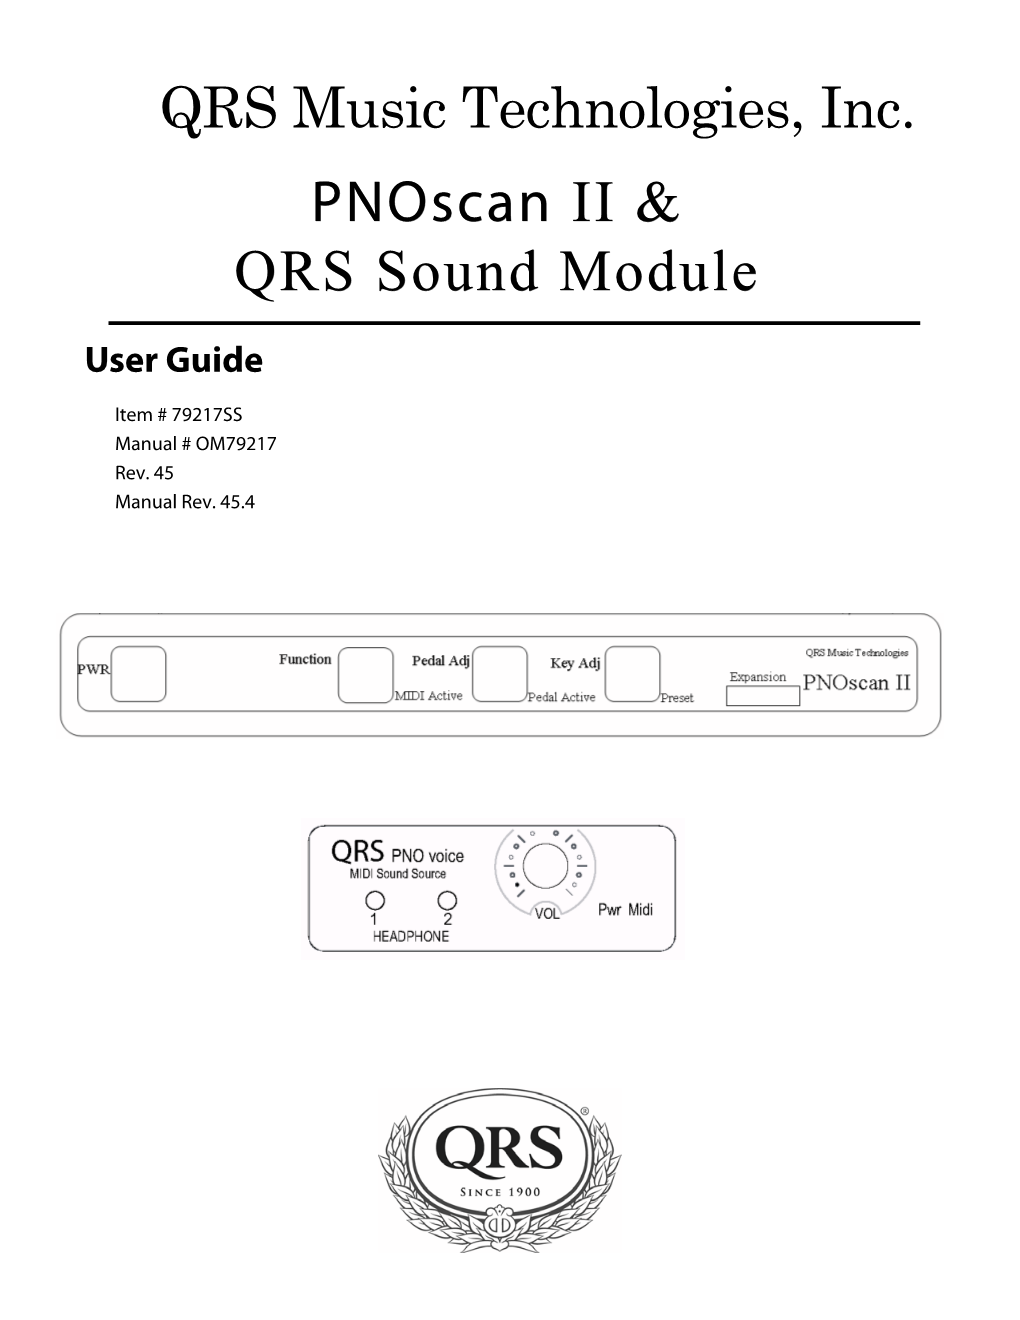 Pnoscan II & QRS Sound Module